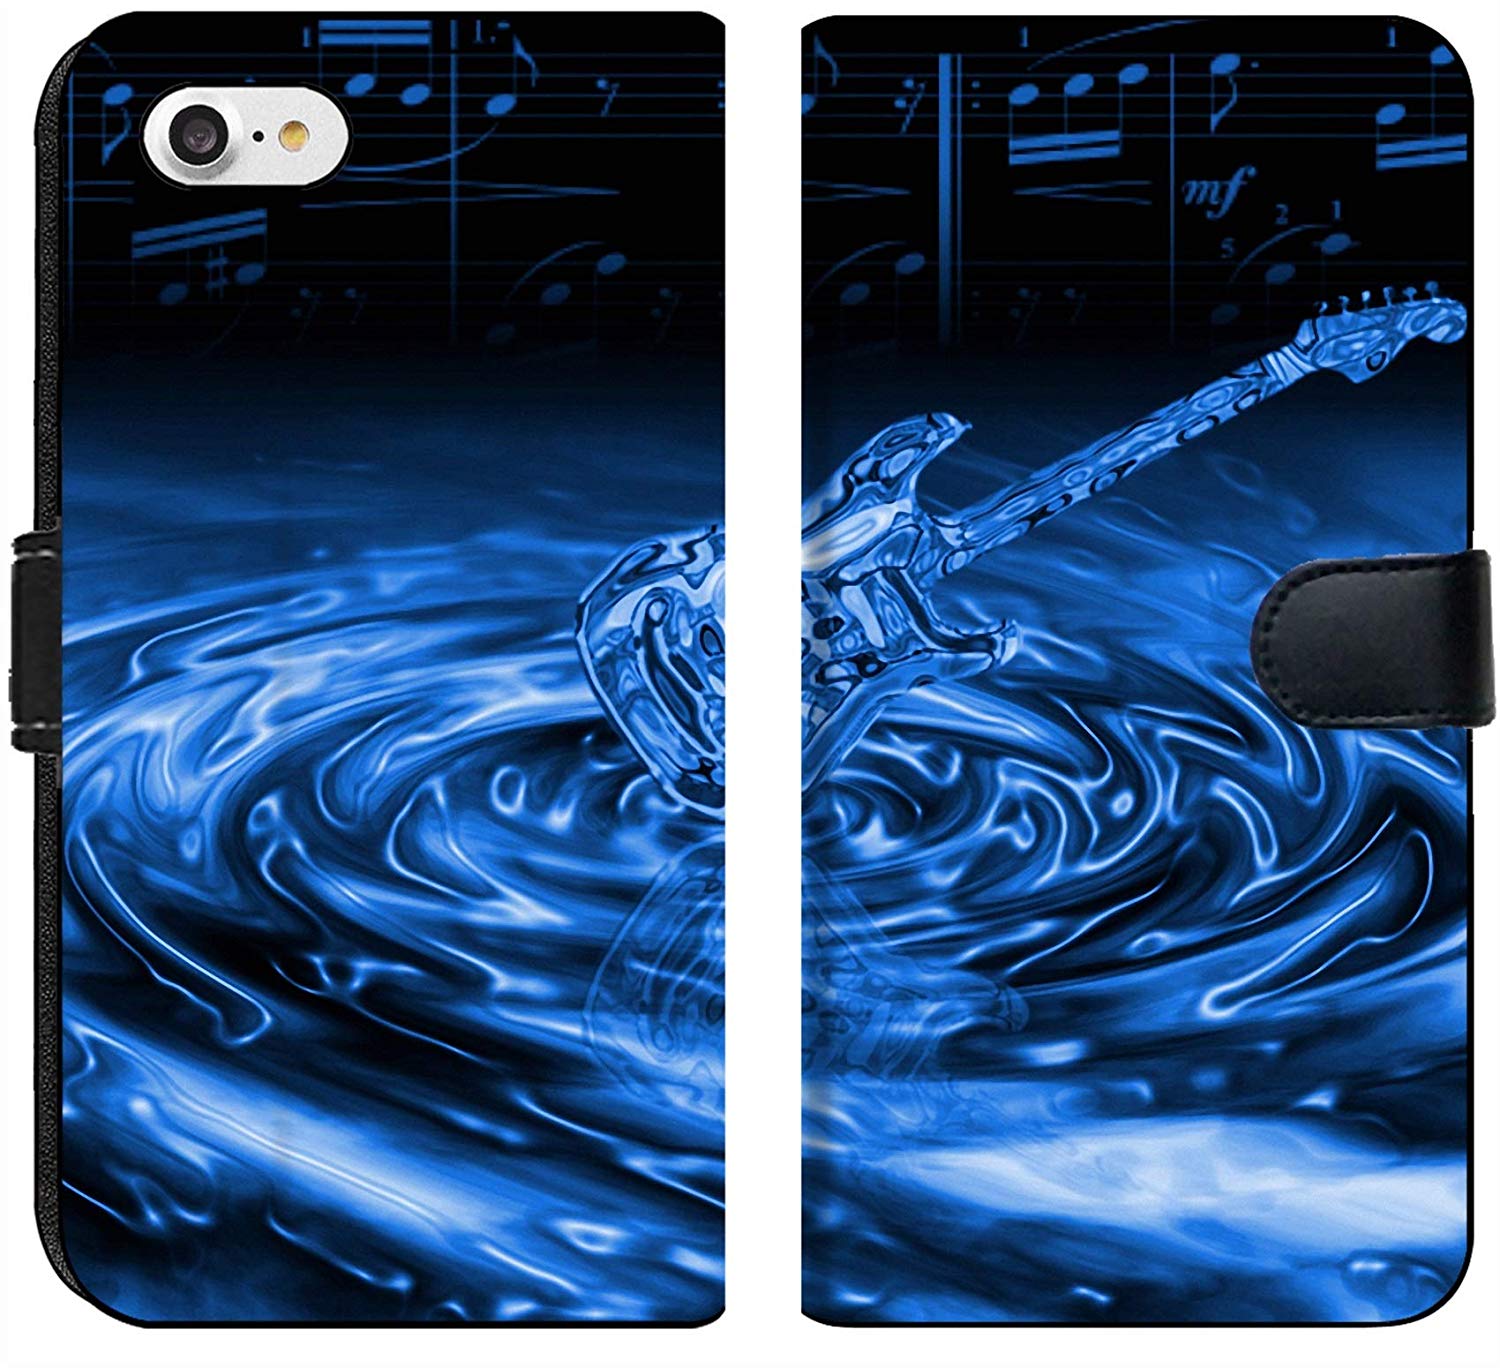 Amazon Apple iPhone Flip Fabric Wallet Case Image Of Blue